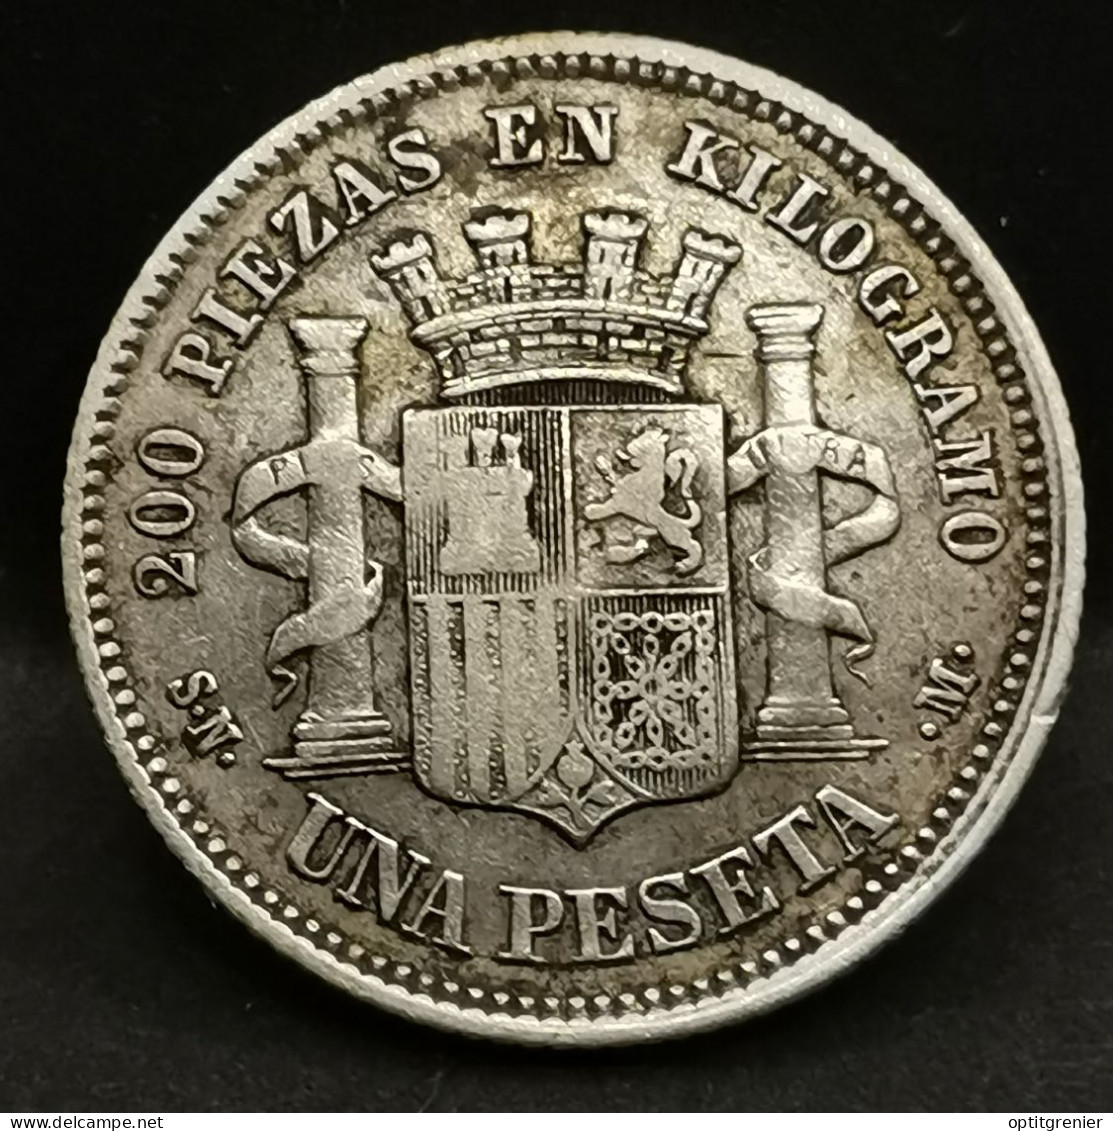 1 PESETA ARGENT 1869 Gouvernement Provisoire ESPAGNE / SPAIN SILVER - First Minting